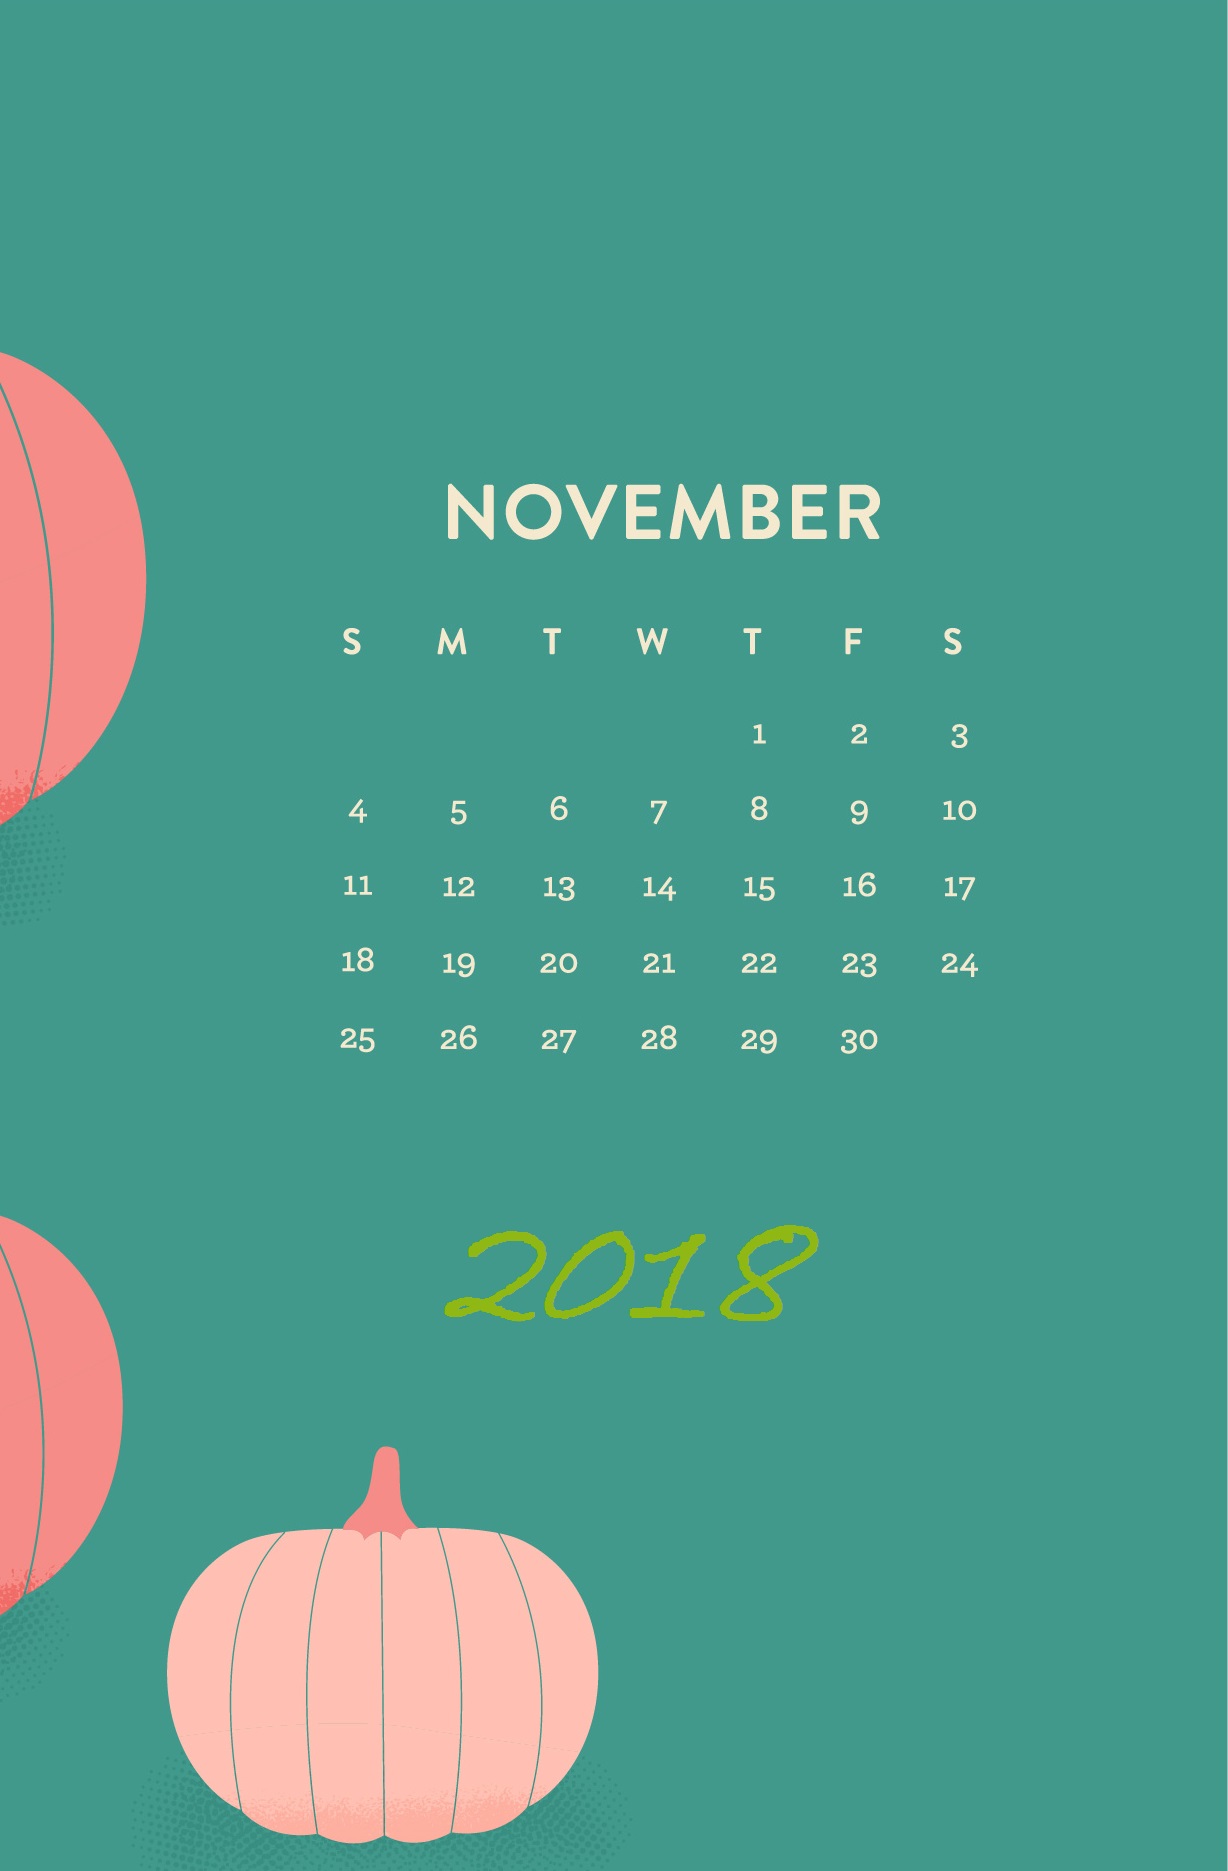 November 2018 Wallpaper With Calendar - November 2018 Wallpaper ...